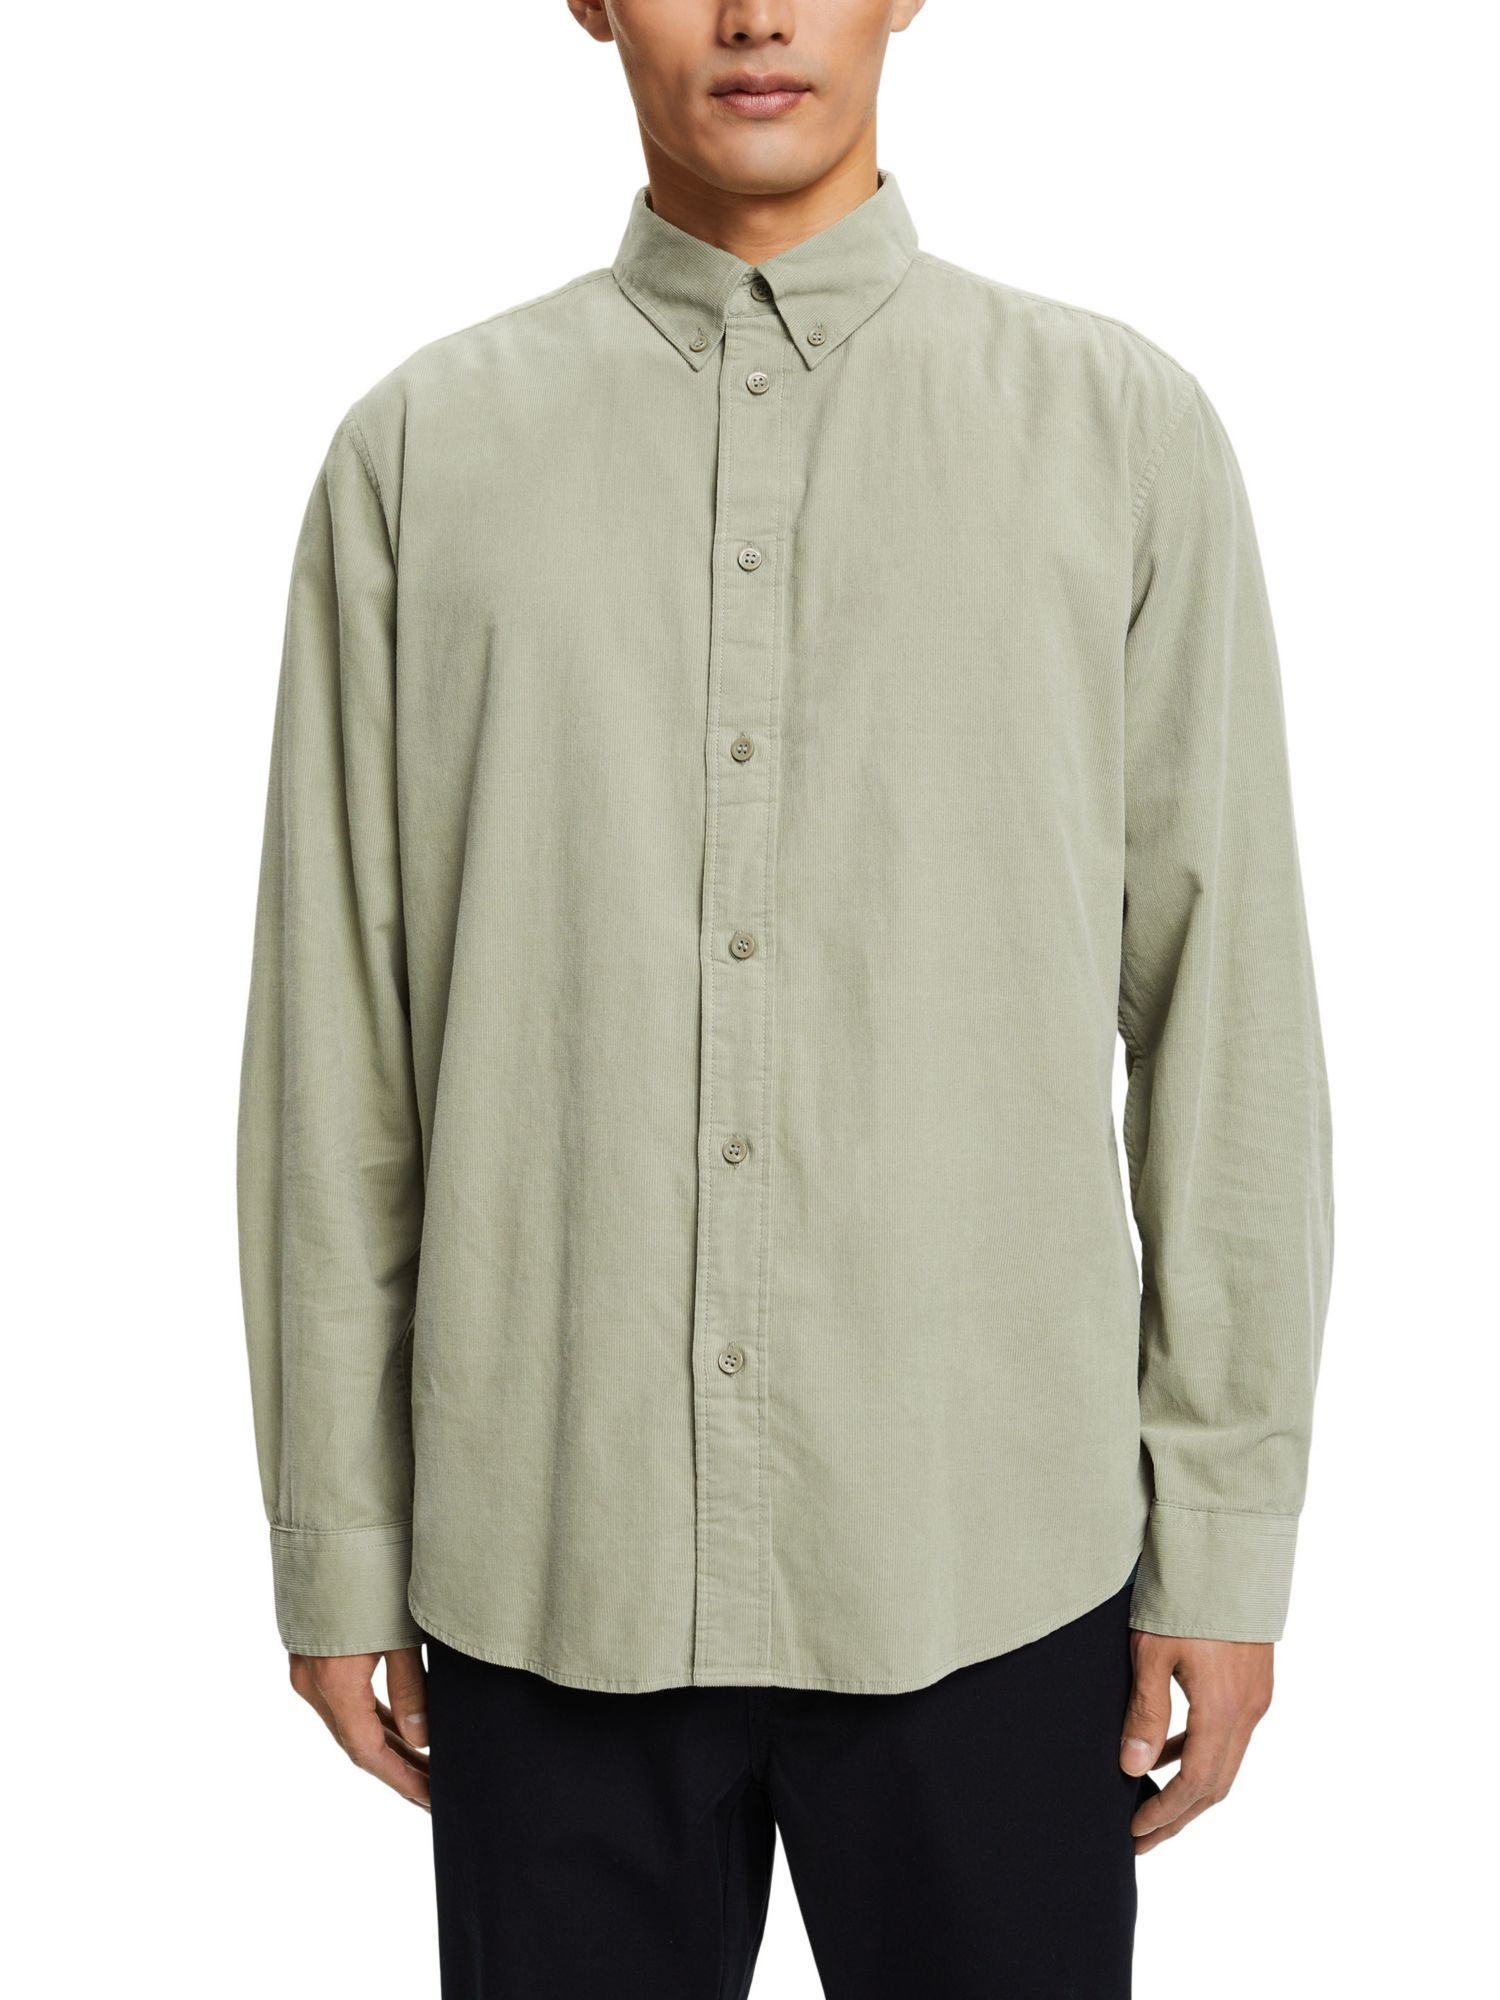 Esprit Langarmhemd Hemd GREEN DUSTY aus Cord, Baumwolle 100